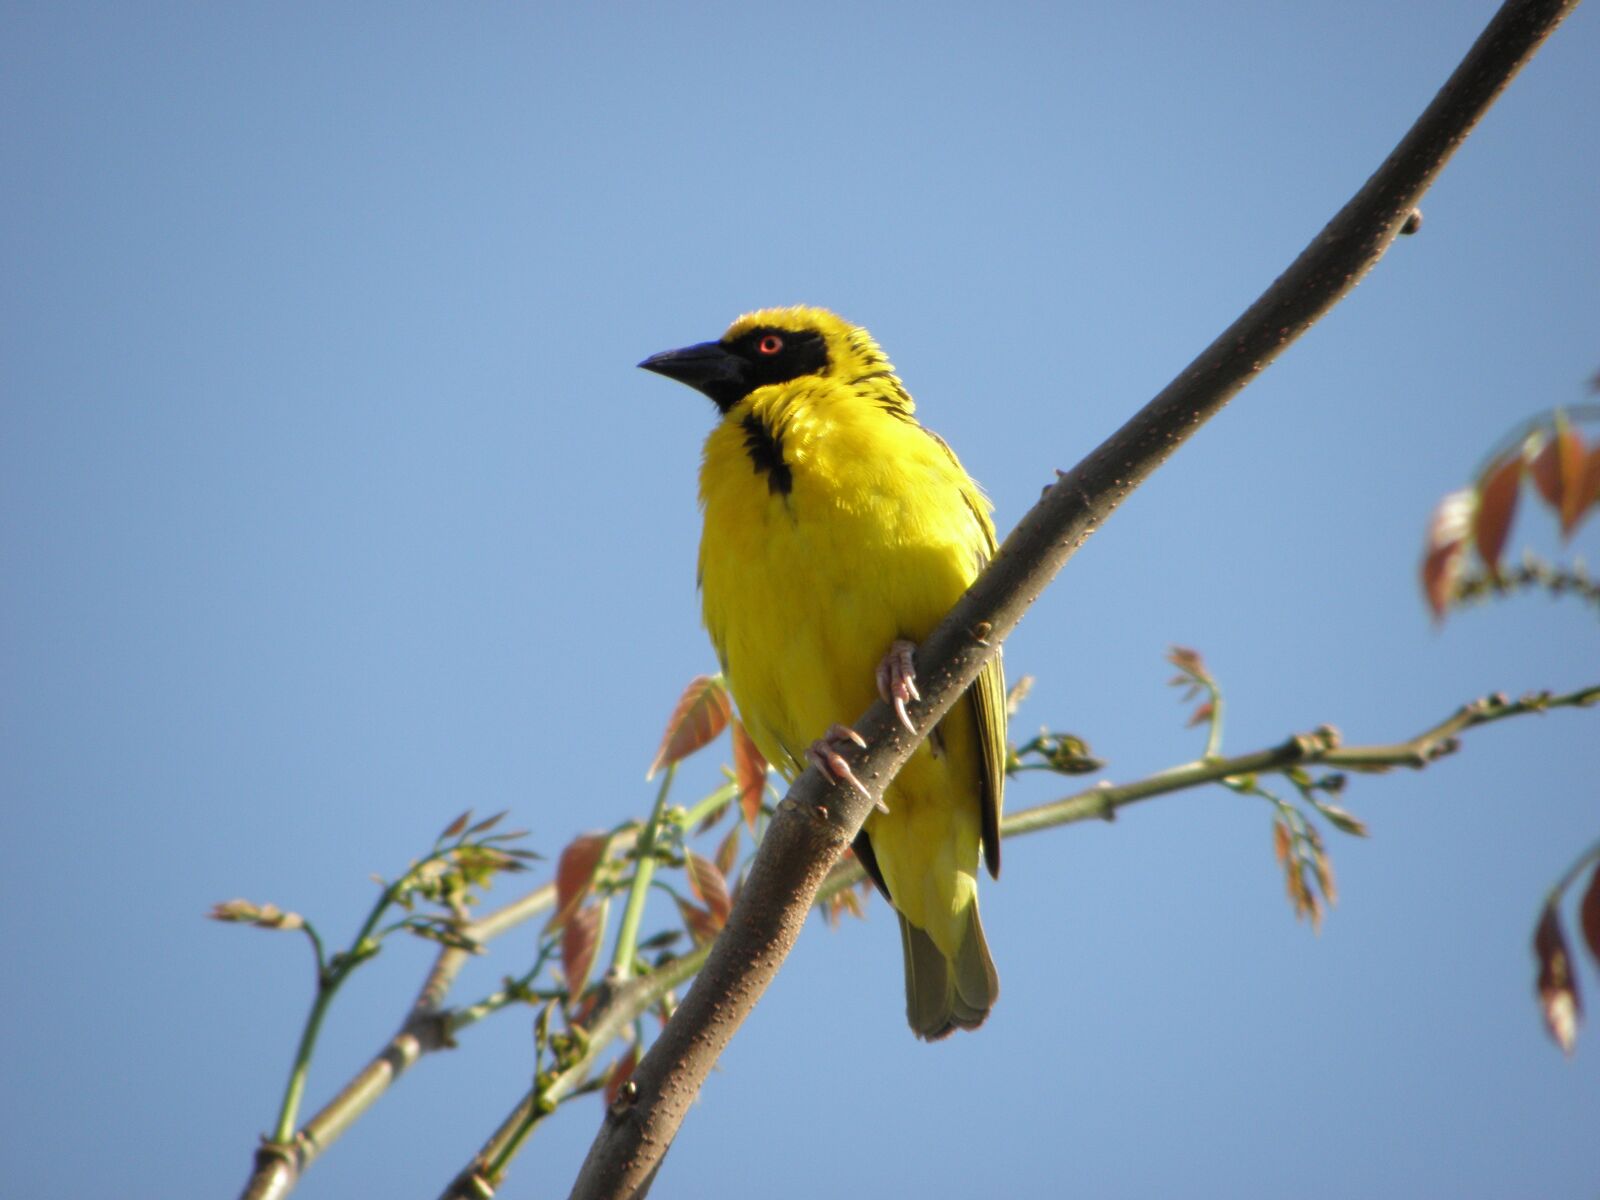 Olympus SP590UZ sample photo. Bird, yellow, nature photography